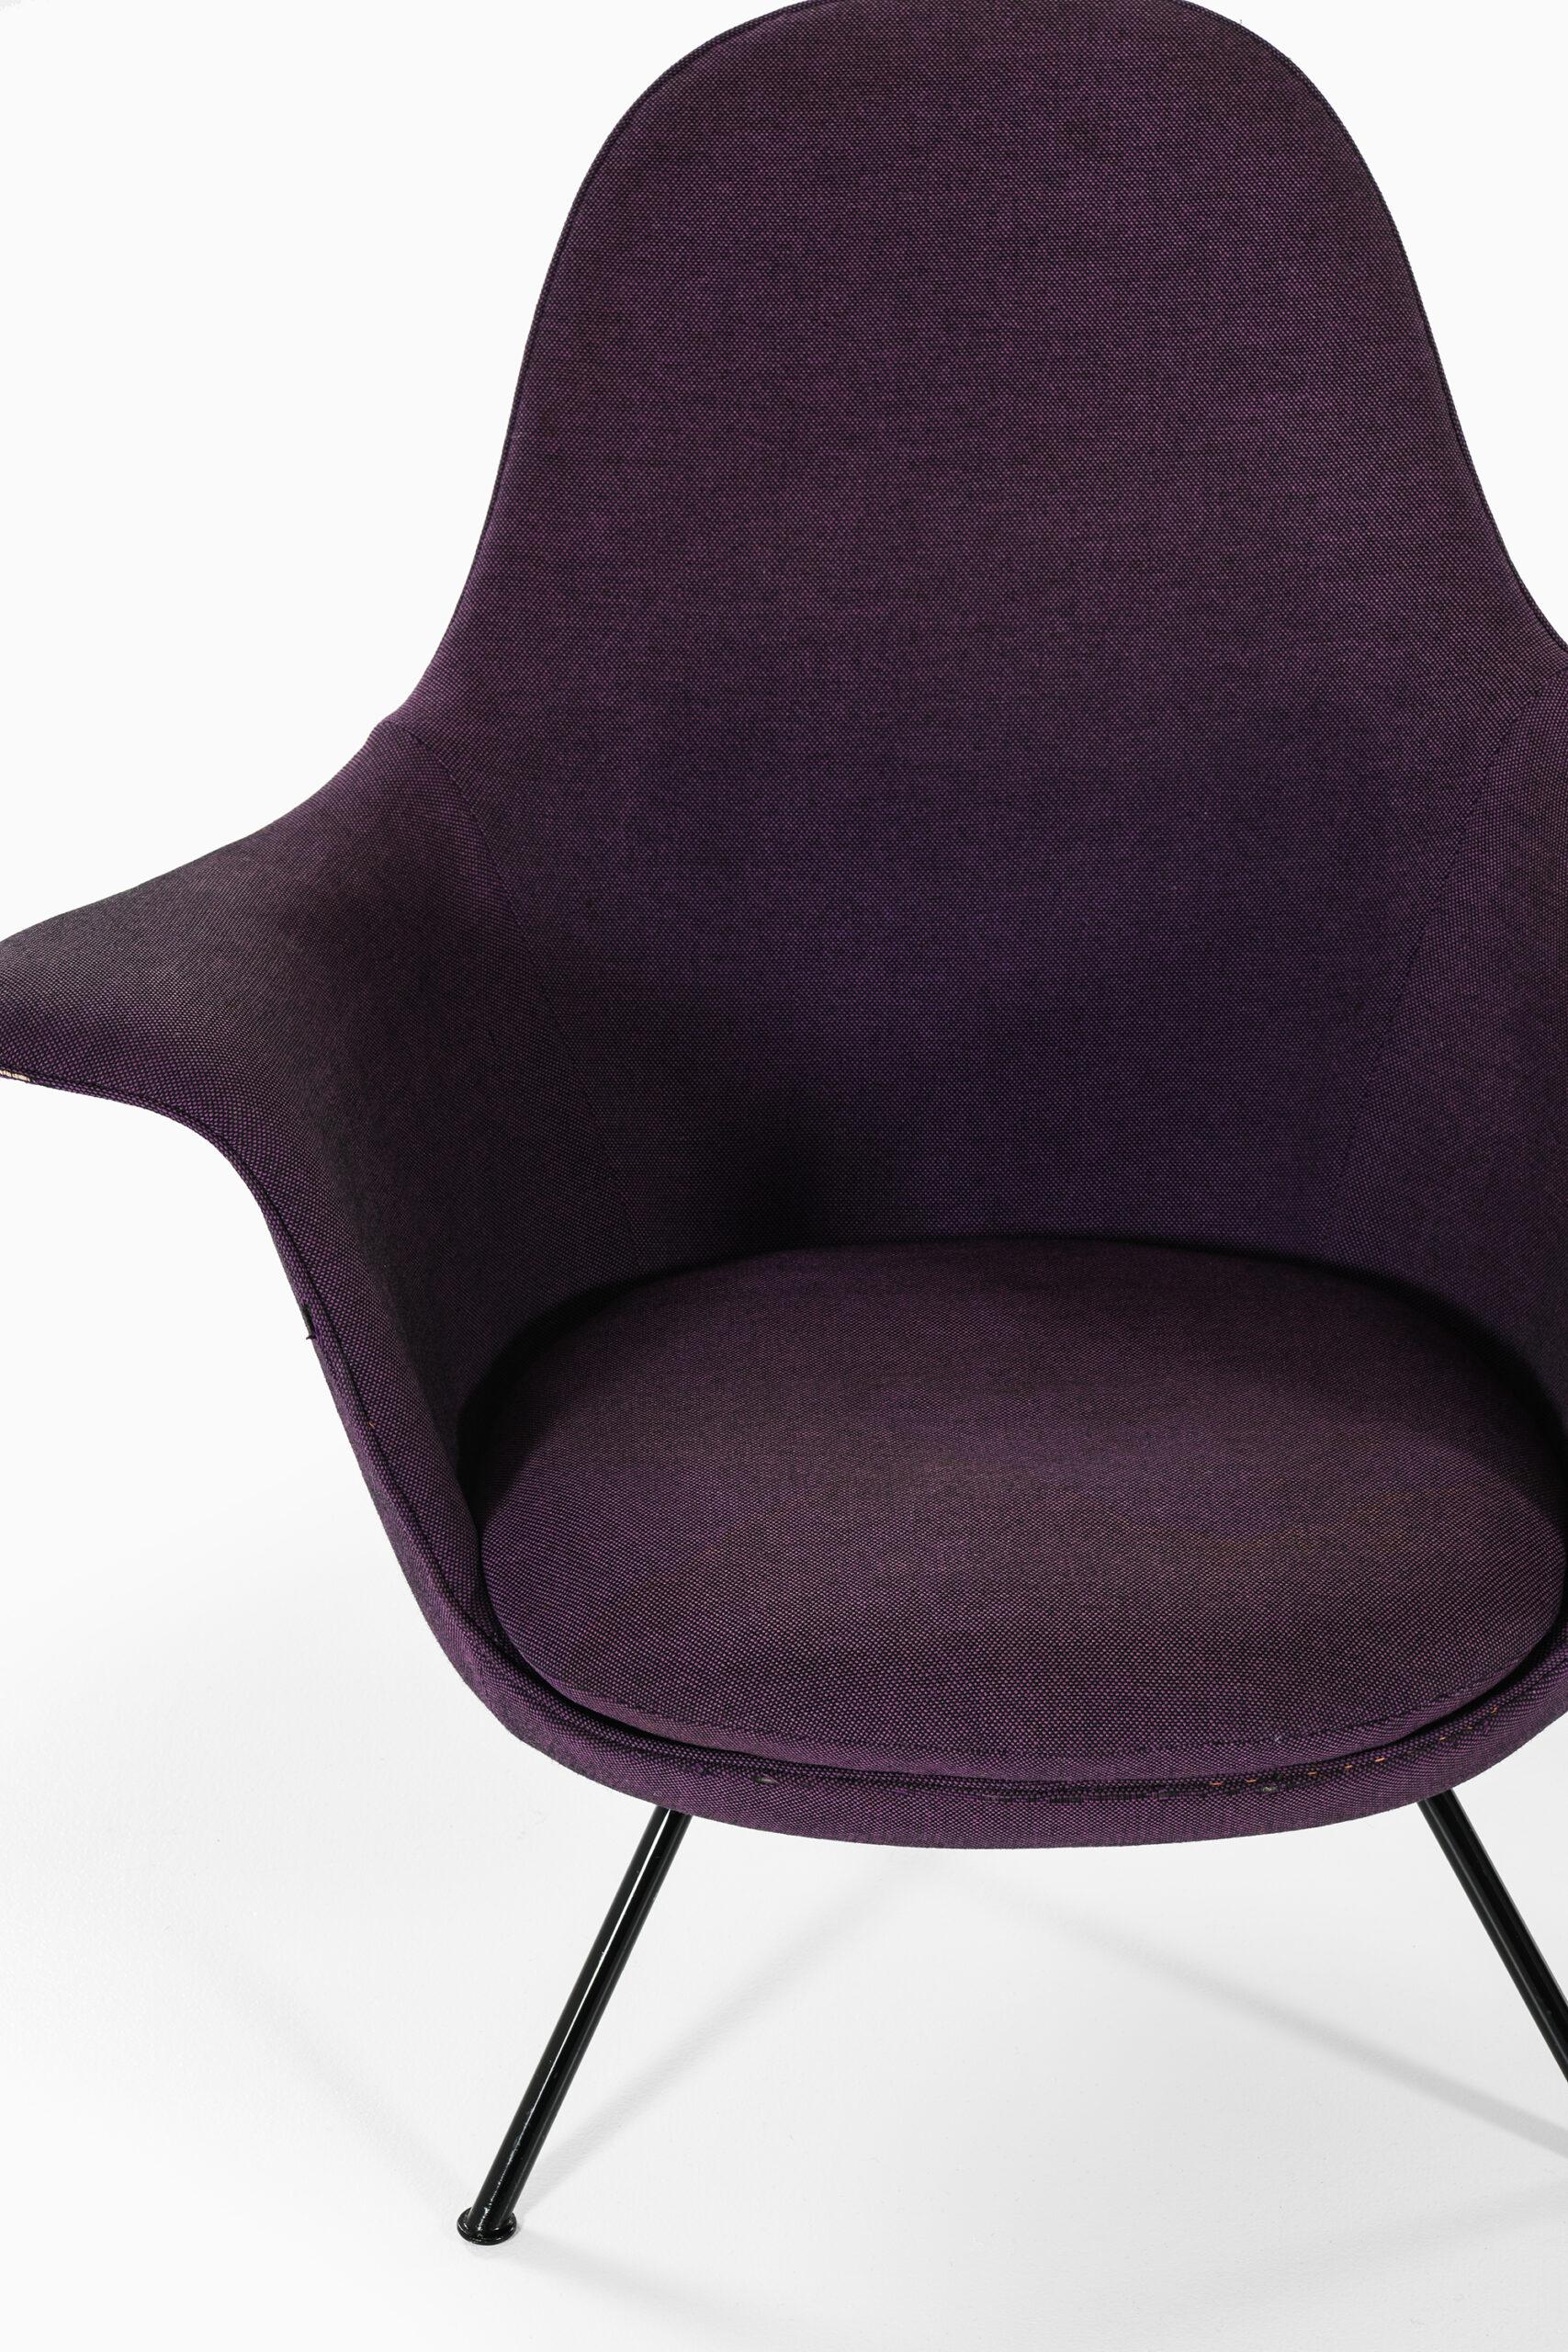 Mid-Century Modern Hans Bellmann Easy Chair Produced by Strässle Söhne & Co For Sale